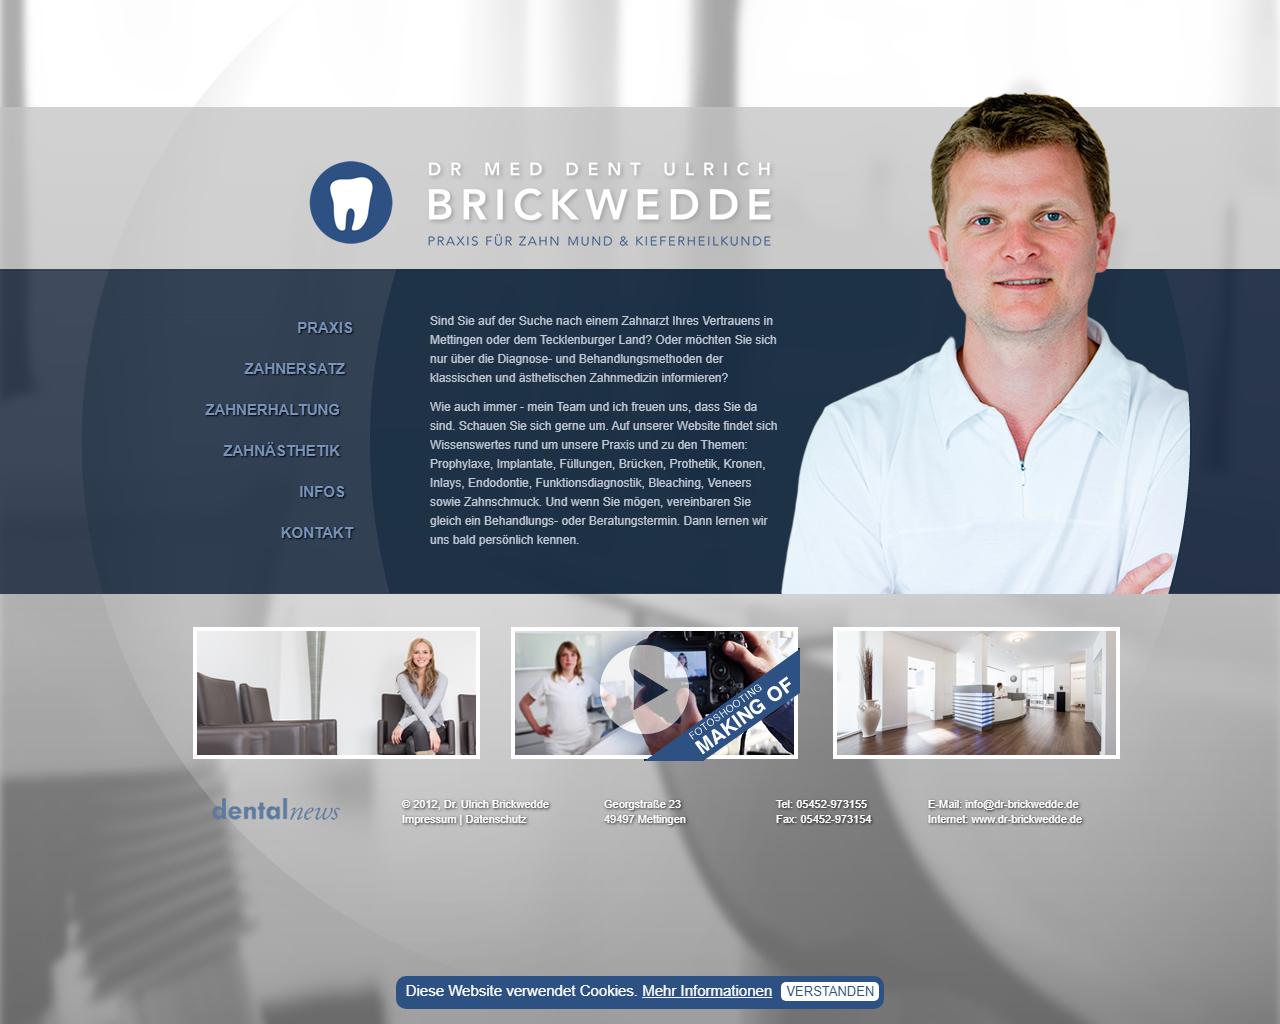 Herr Dr. Ulrich Brickwedde